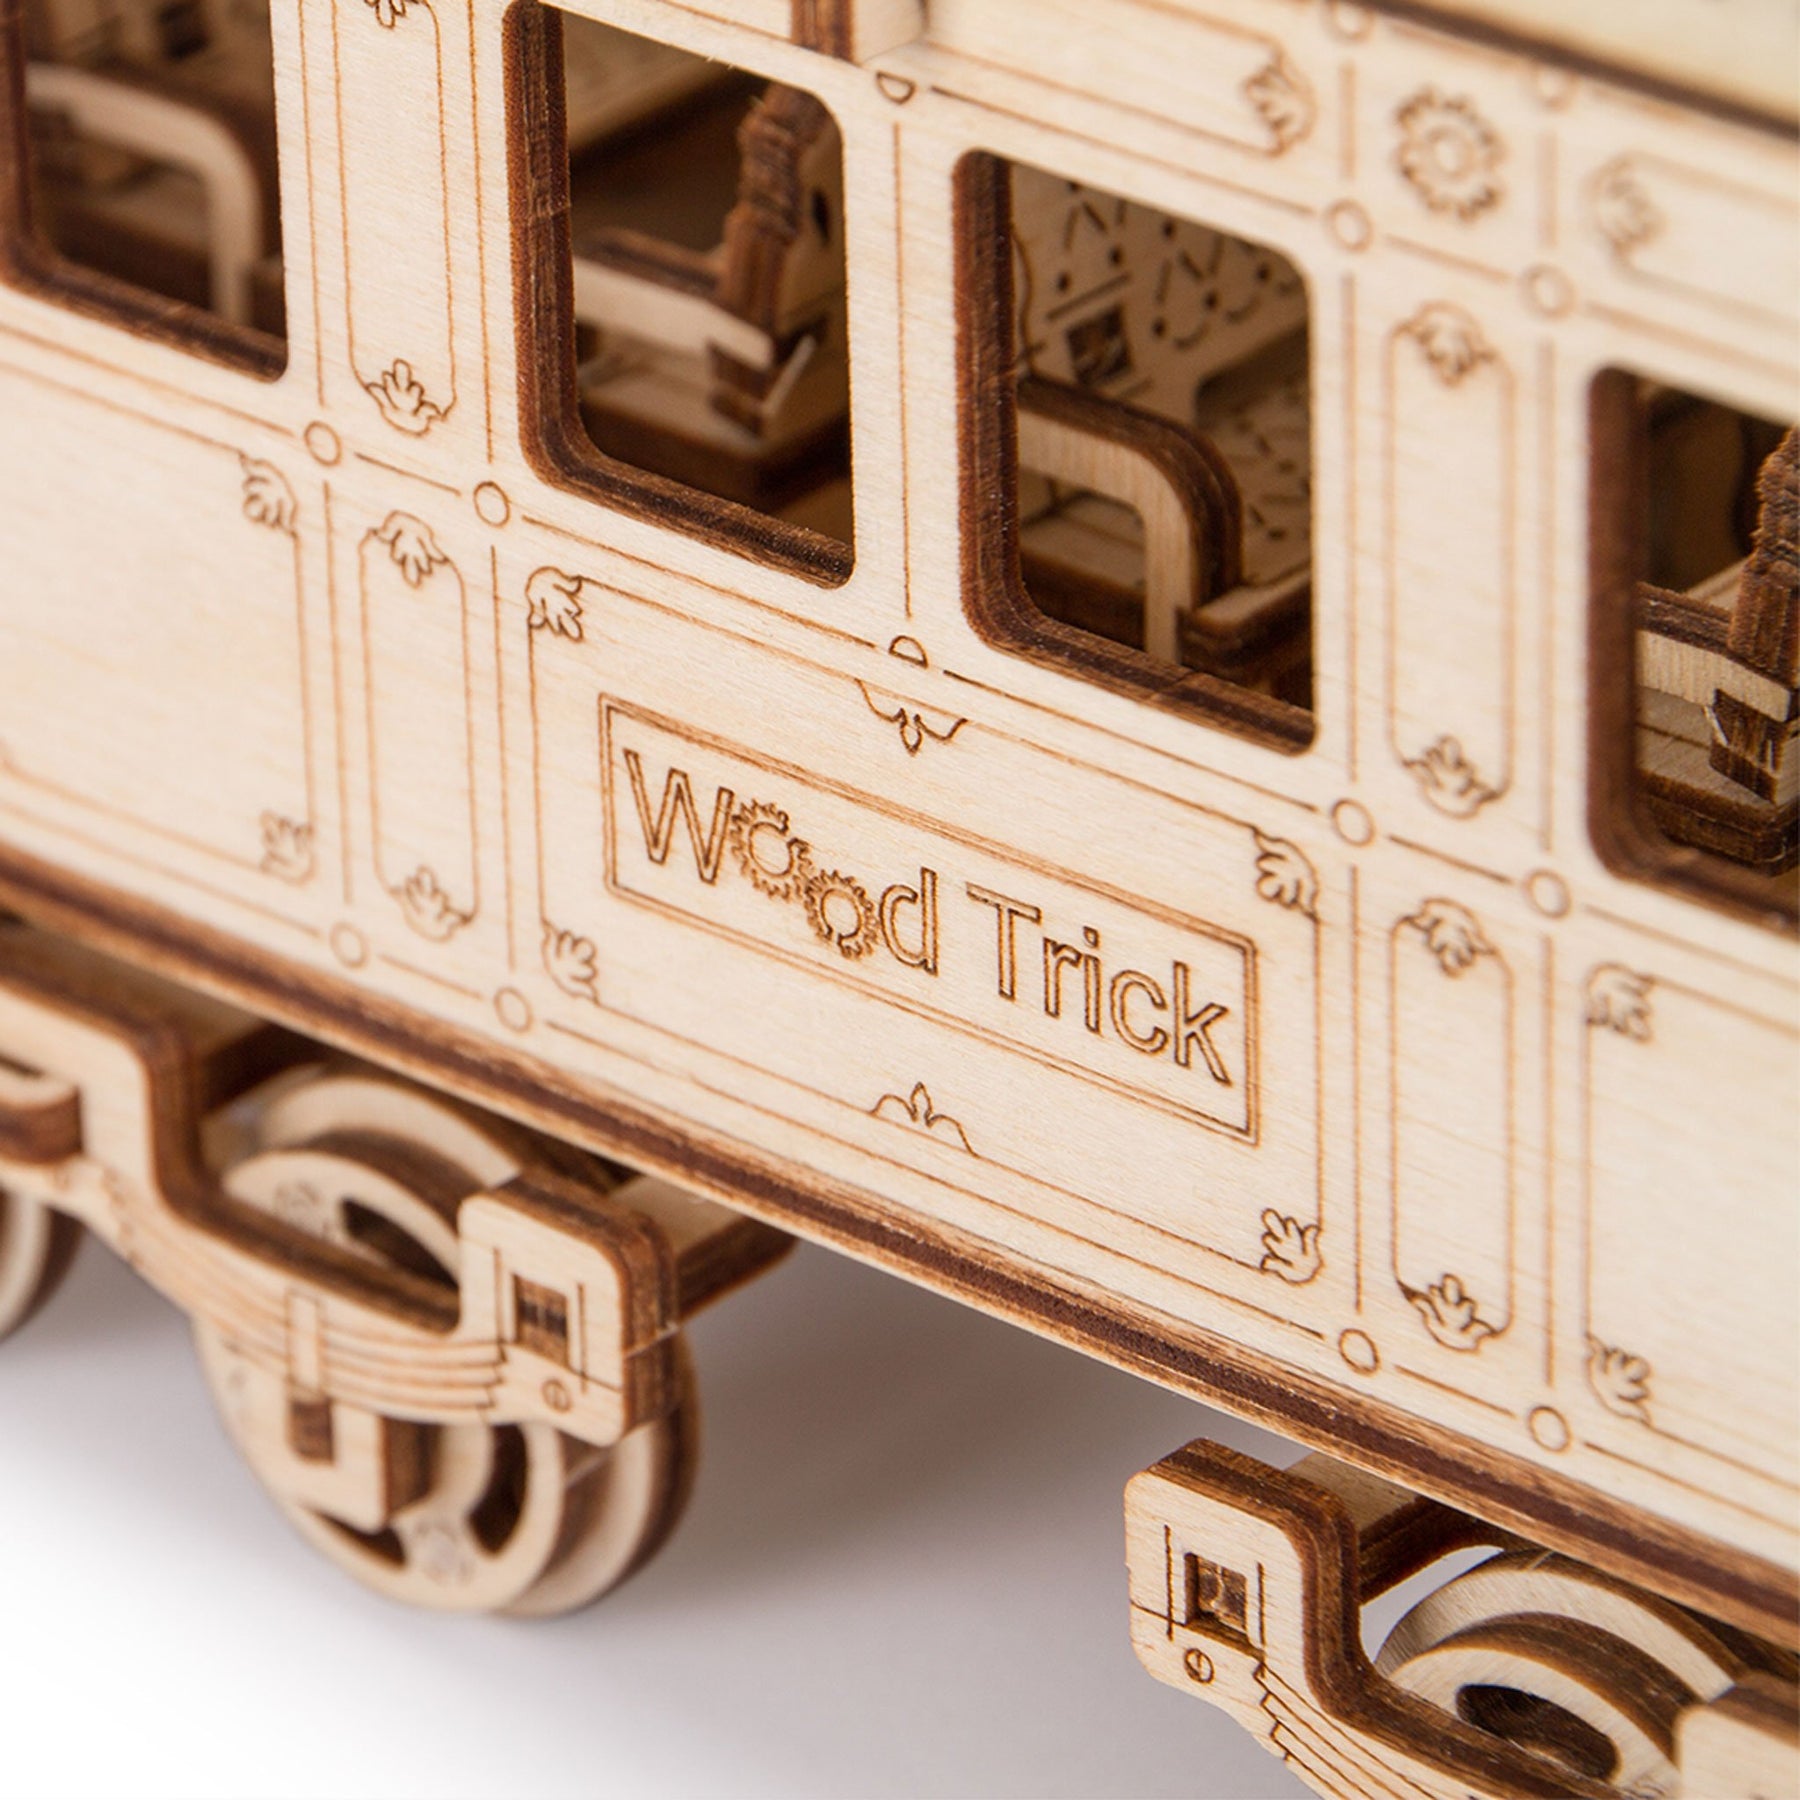 Locomotive R17-Mechanical Wooden Puzzle-WoodTrick--